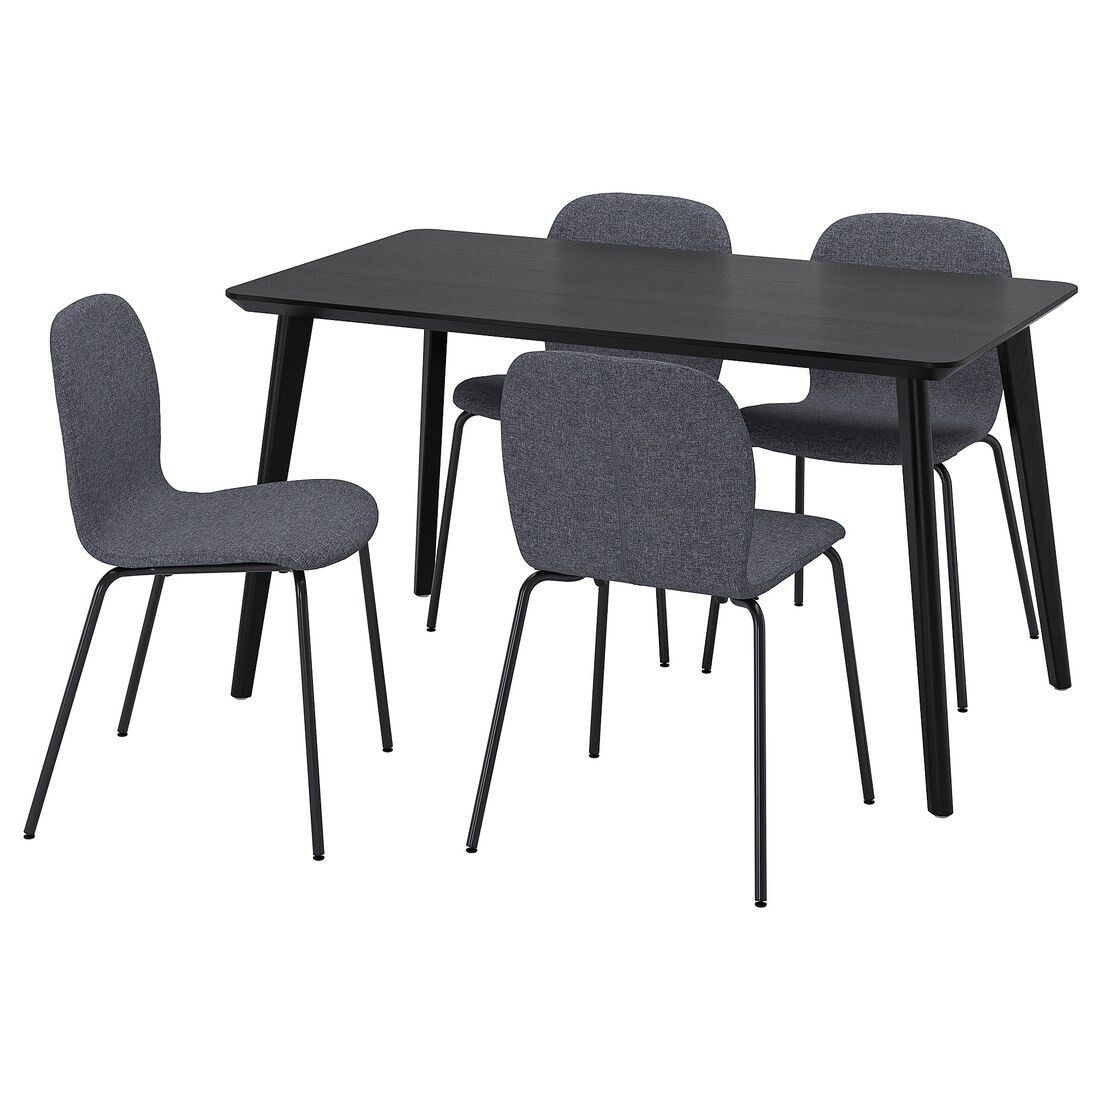 LISABO / KARLPETTER ЛИСАБО / КАРЛПЕТТЕР Стол и 4 стула, черный / Gunnared серый черный, 140x78 см